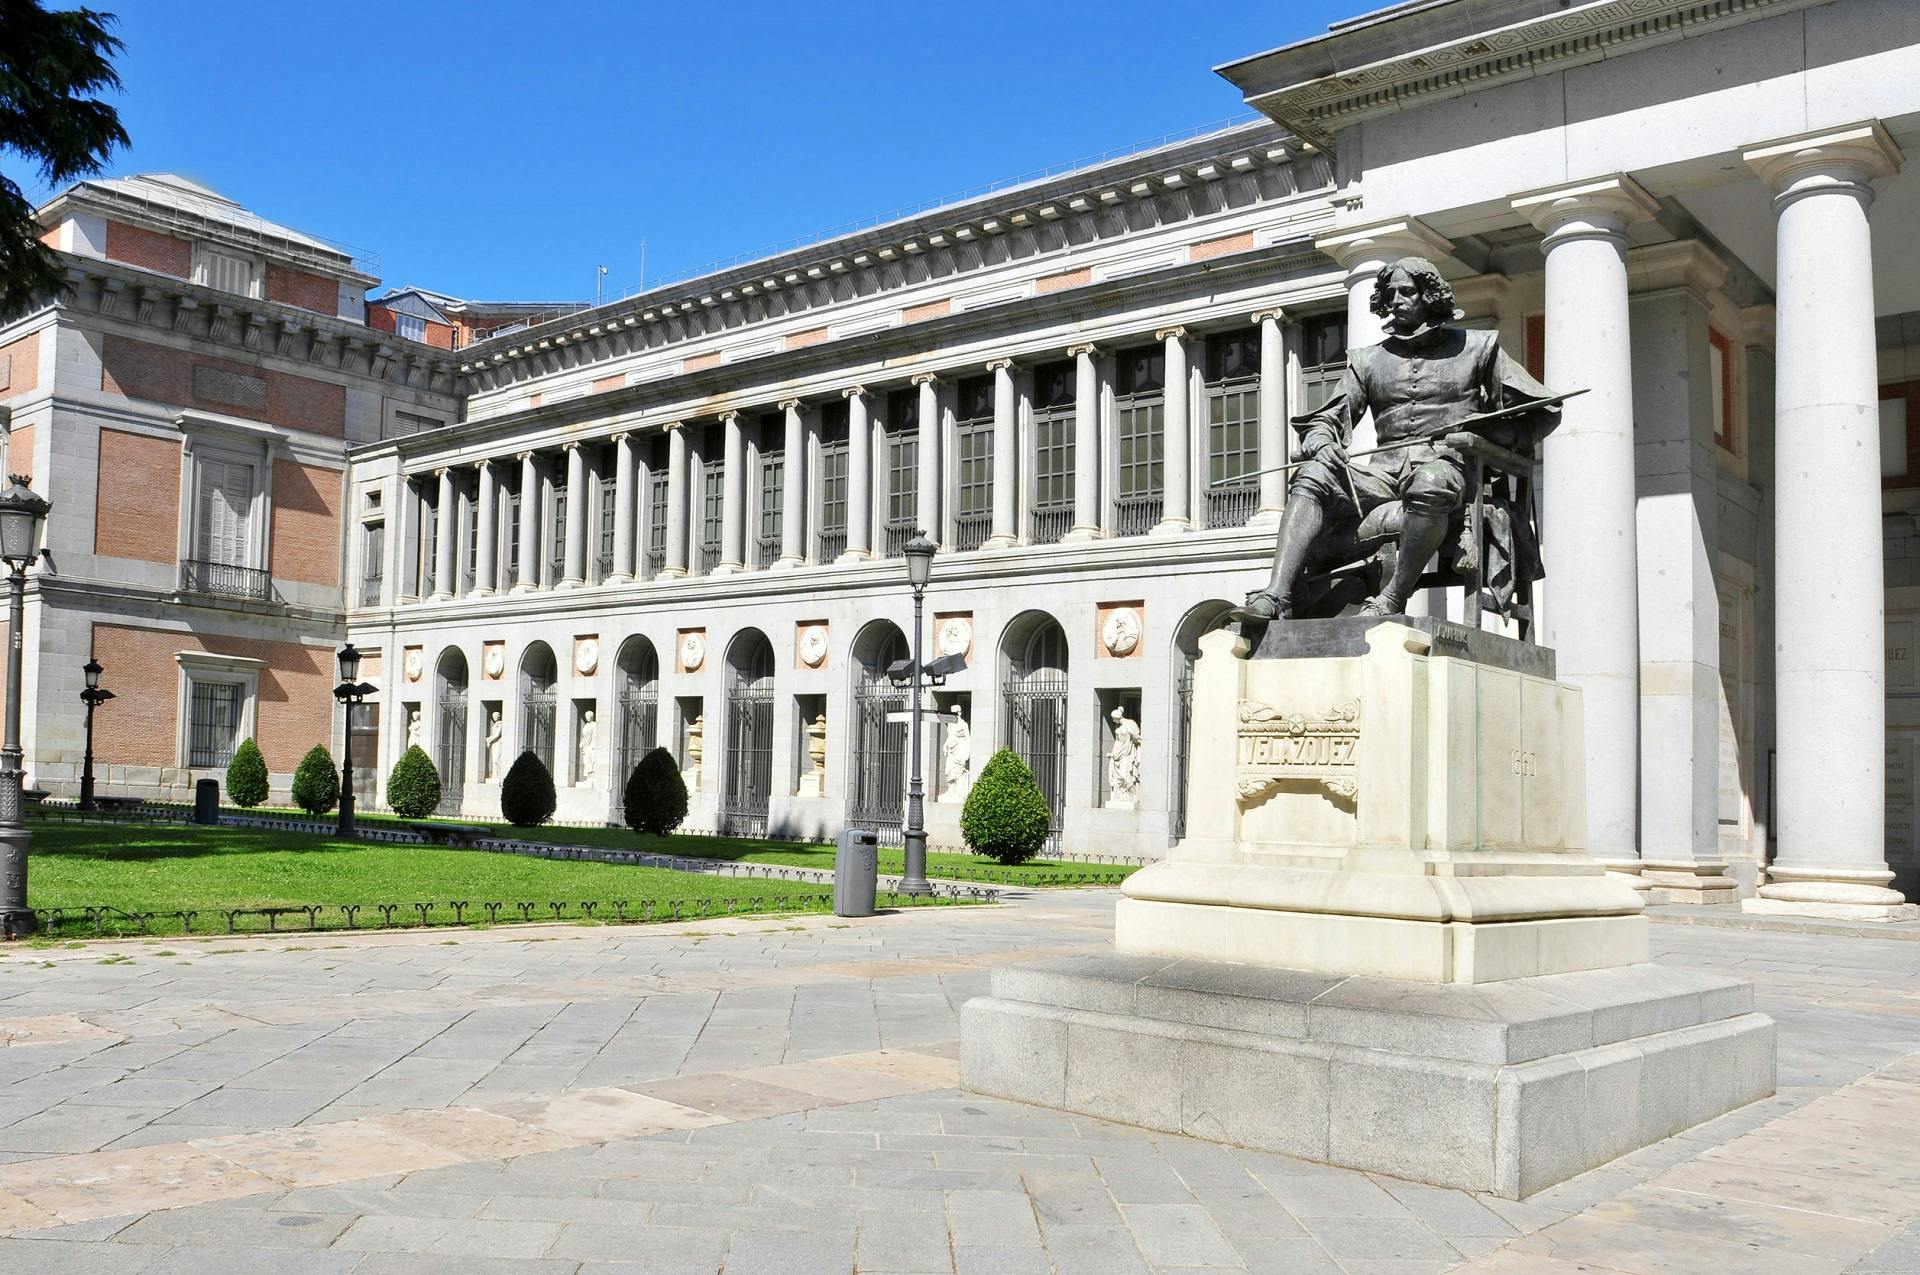 Tour guidato per piccoli gruppi del Museo del Prado in inglese